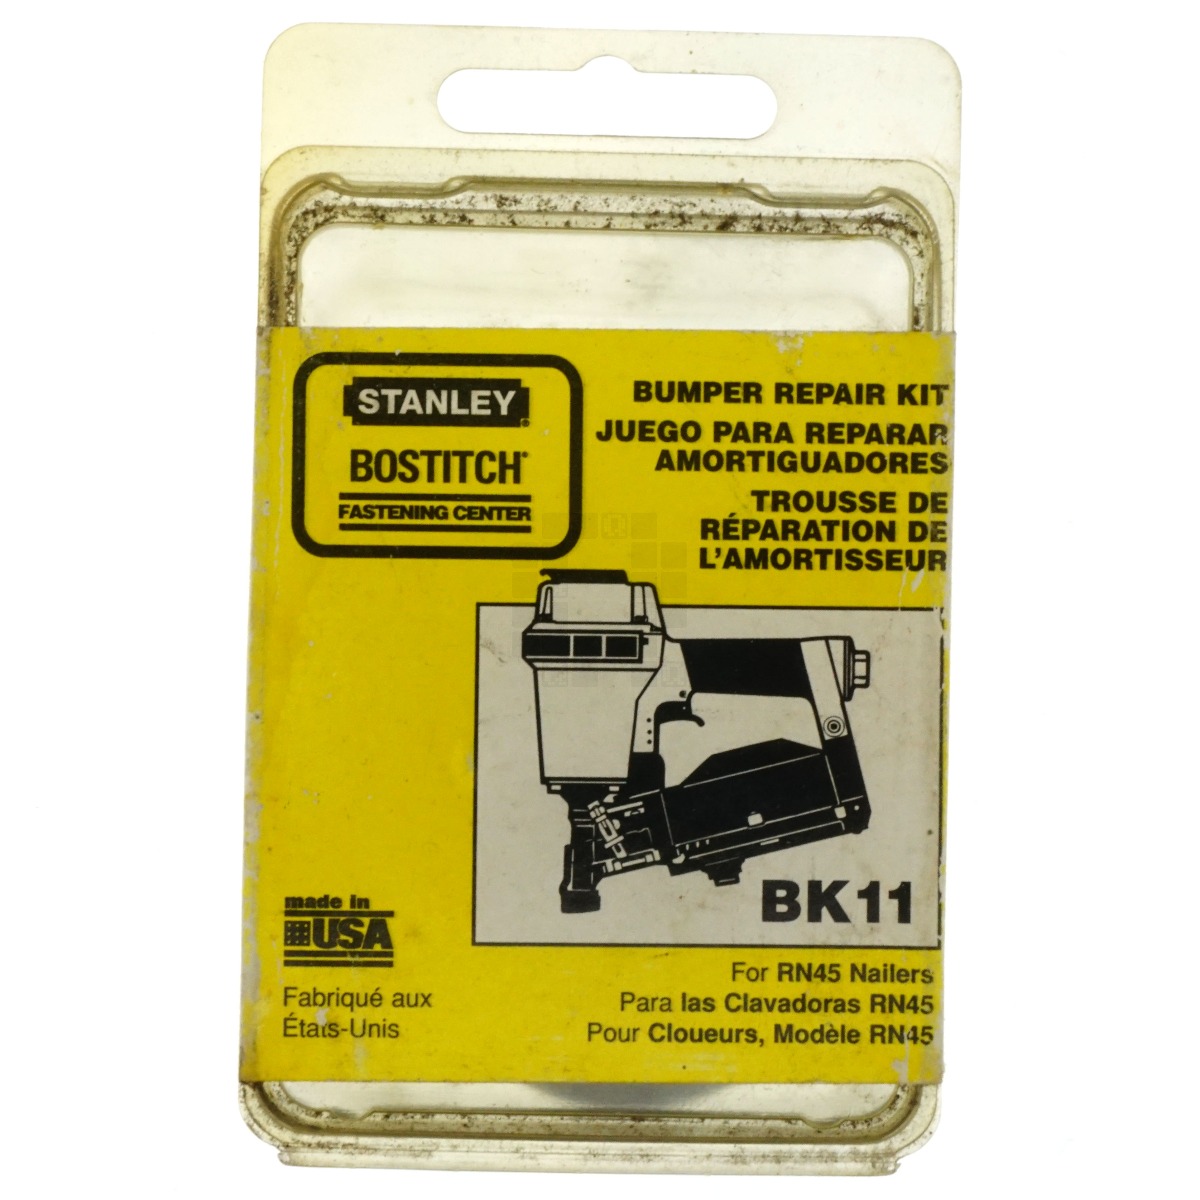 Stanley Bostitch BK11 Bumper Repair Kit, for RN45 Nailers